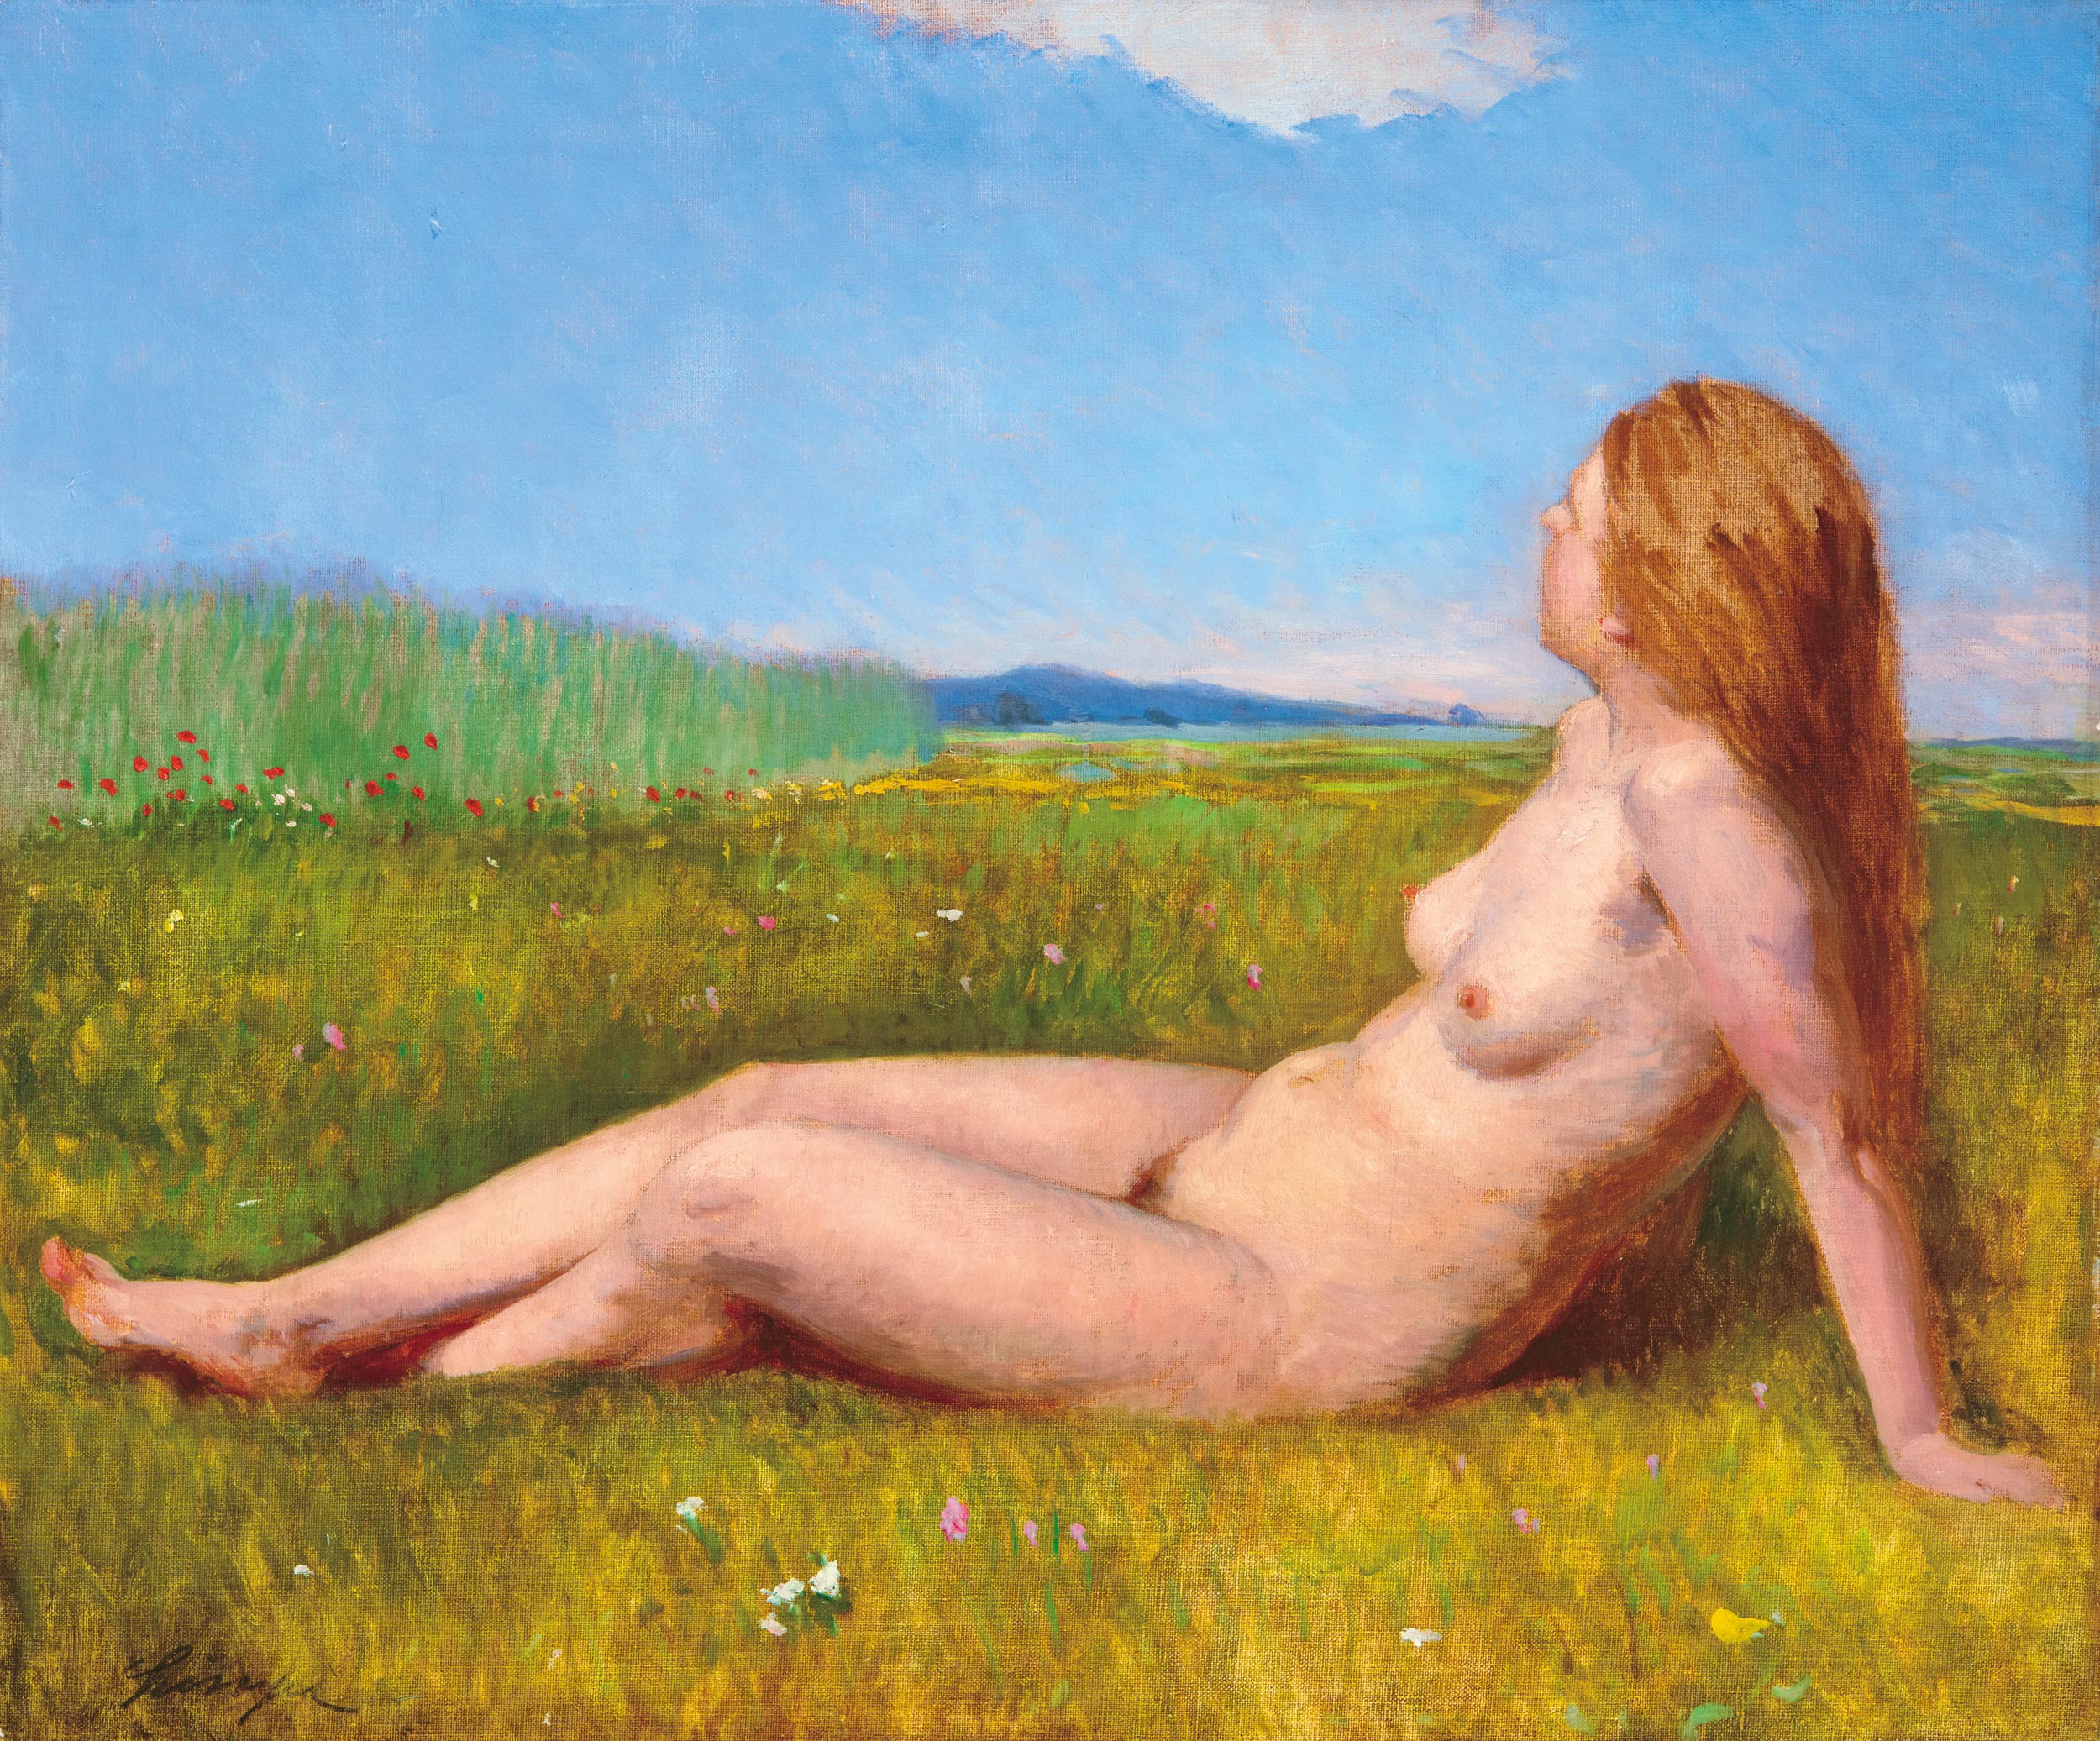 Szinyei Merse Pál (1845-1920) Nude for a Variant of Skylark, around 1900-1903